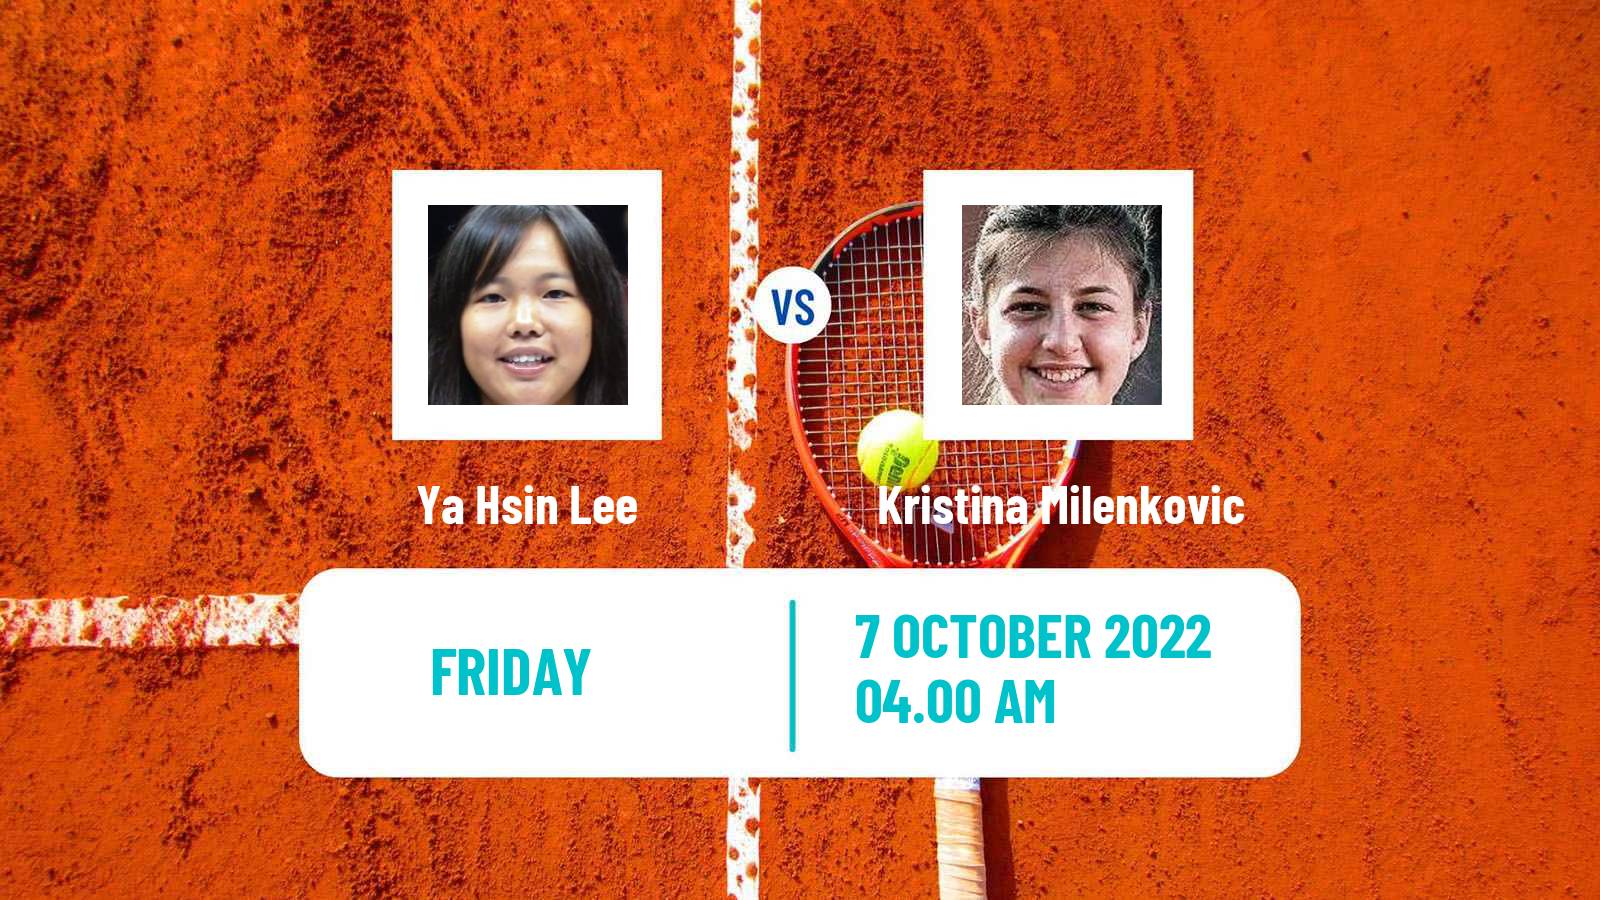 Tennis ITF Tournaments Ya Hsin Lee - Kristina Milenkovic